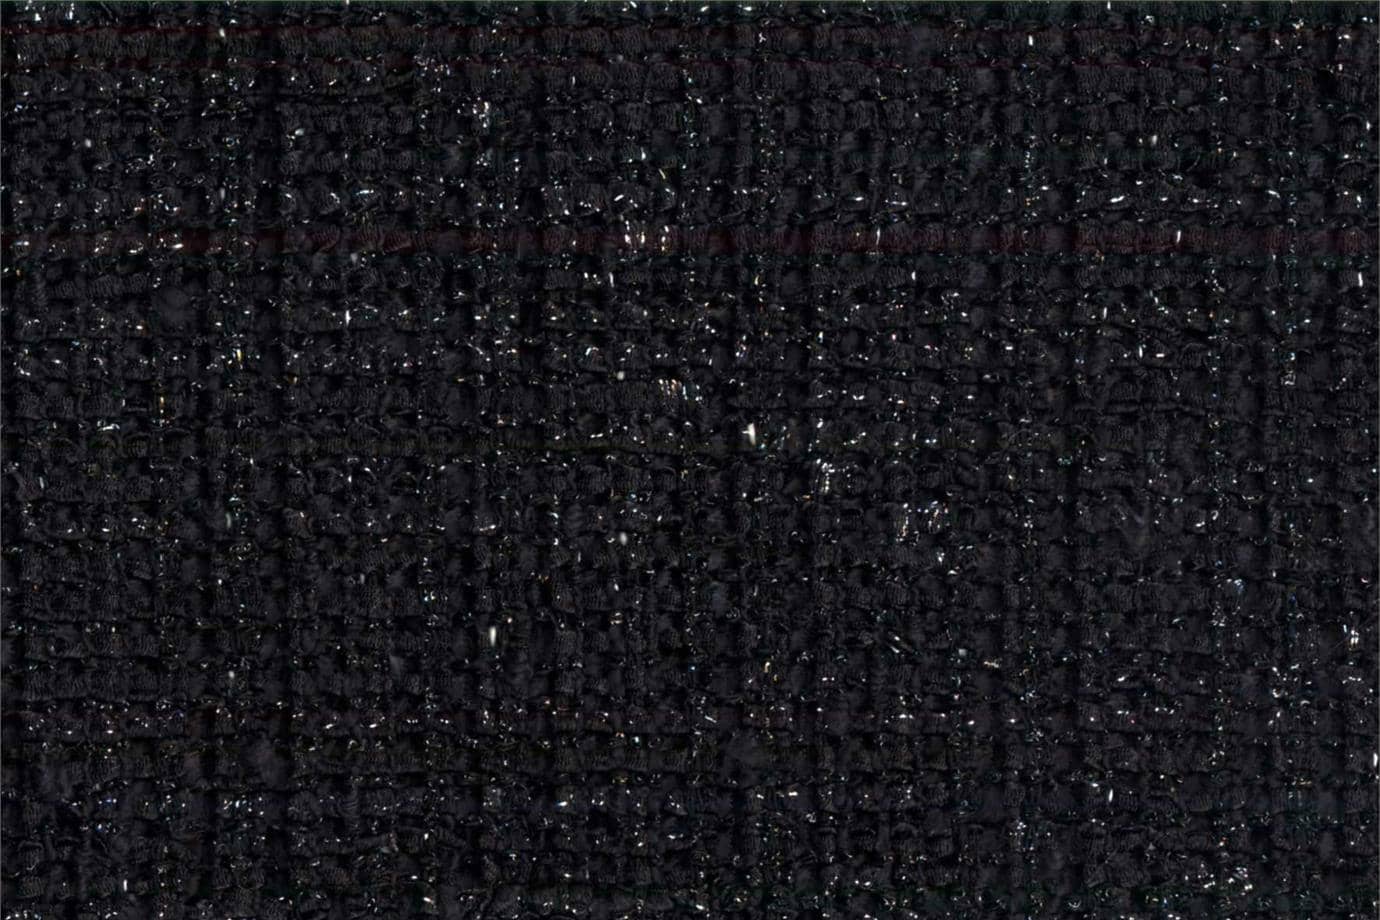 Tessuto per arredamento J3668UNI TRIBECA 001 Bianco nero